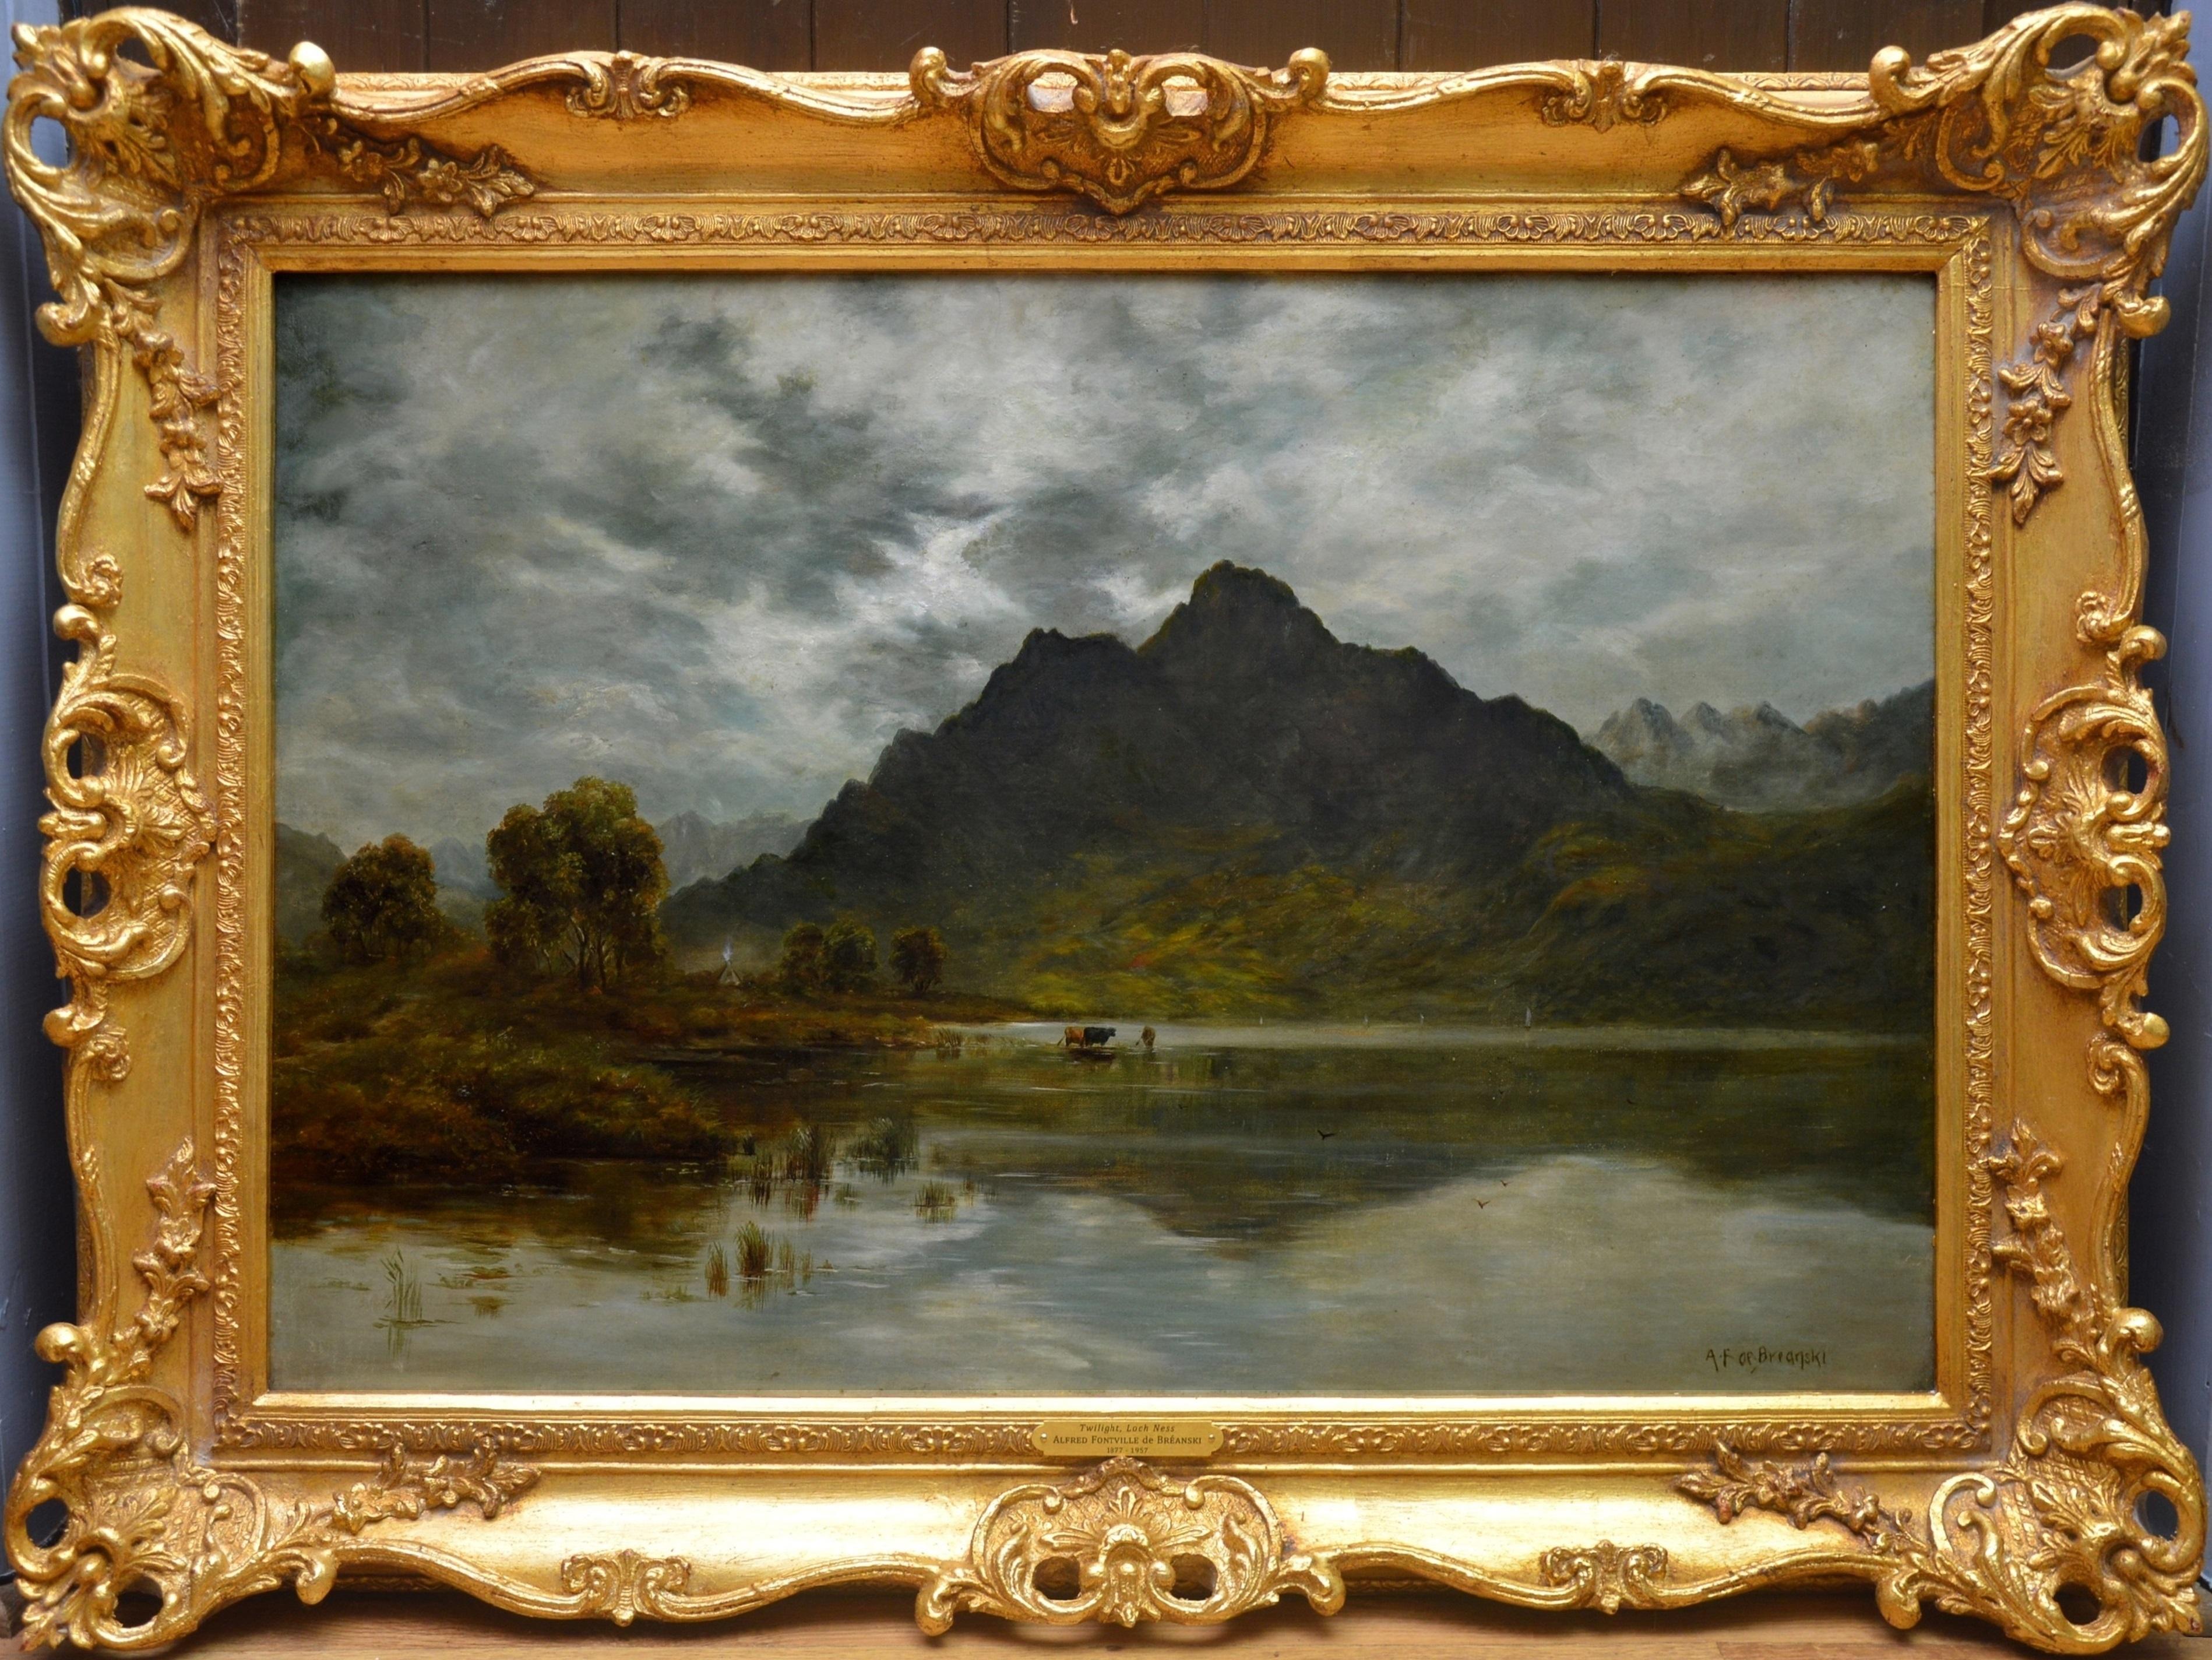 Alfred de Breanski Jnr. Landscape Painting - Twilight, Loch Ness - 19th Century Oil Painting Nocturne of Scottish Highlands